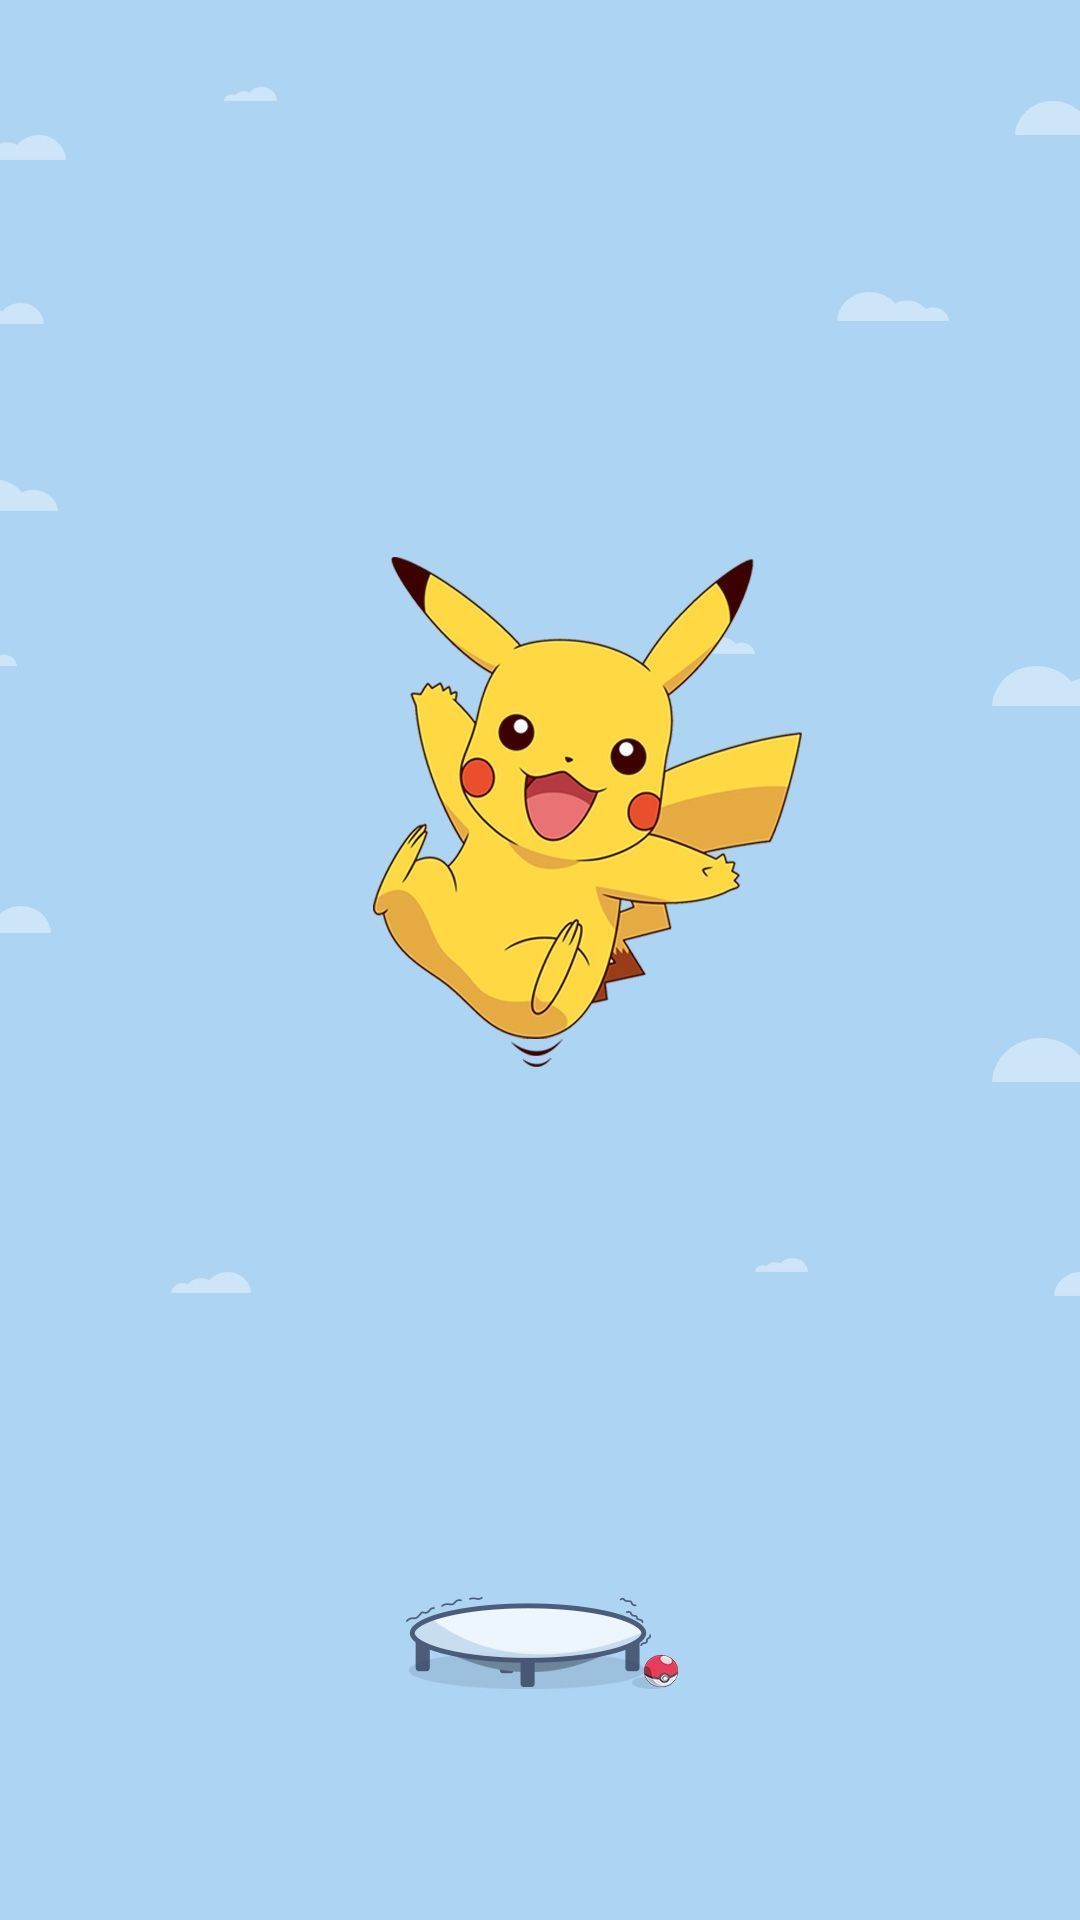 Cute Pokemon. Cute pokemon wallpaper, Pikachu wallpaper, Cute